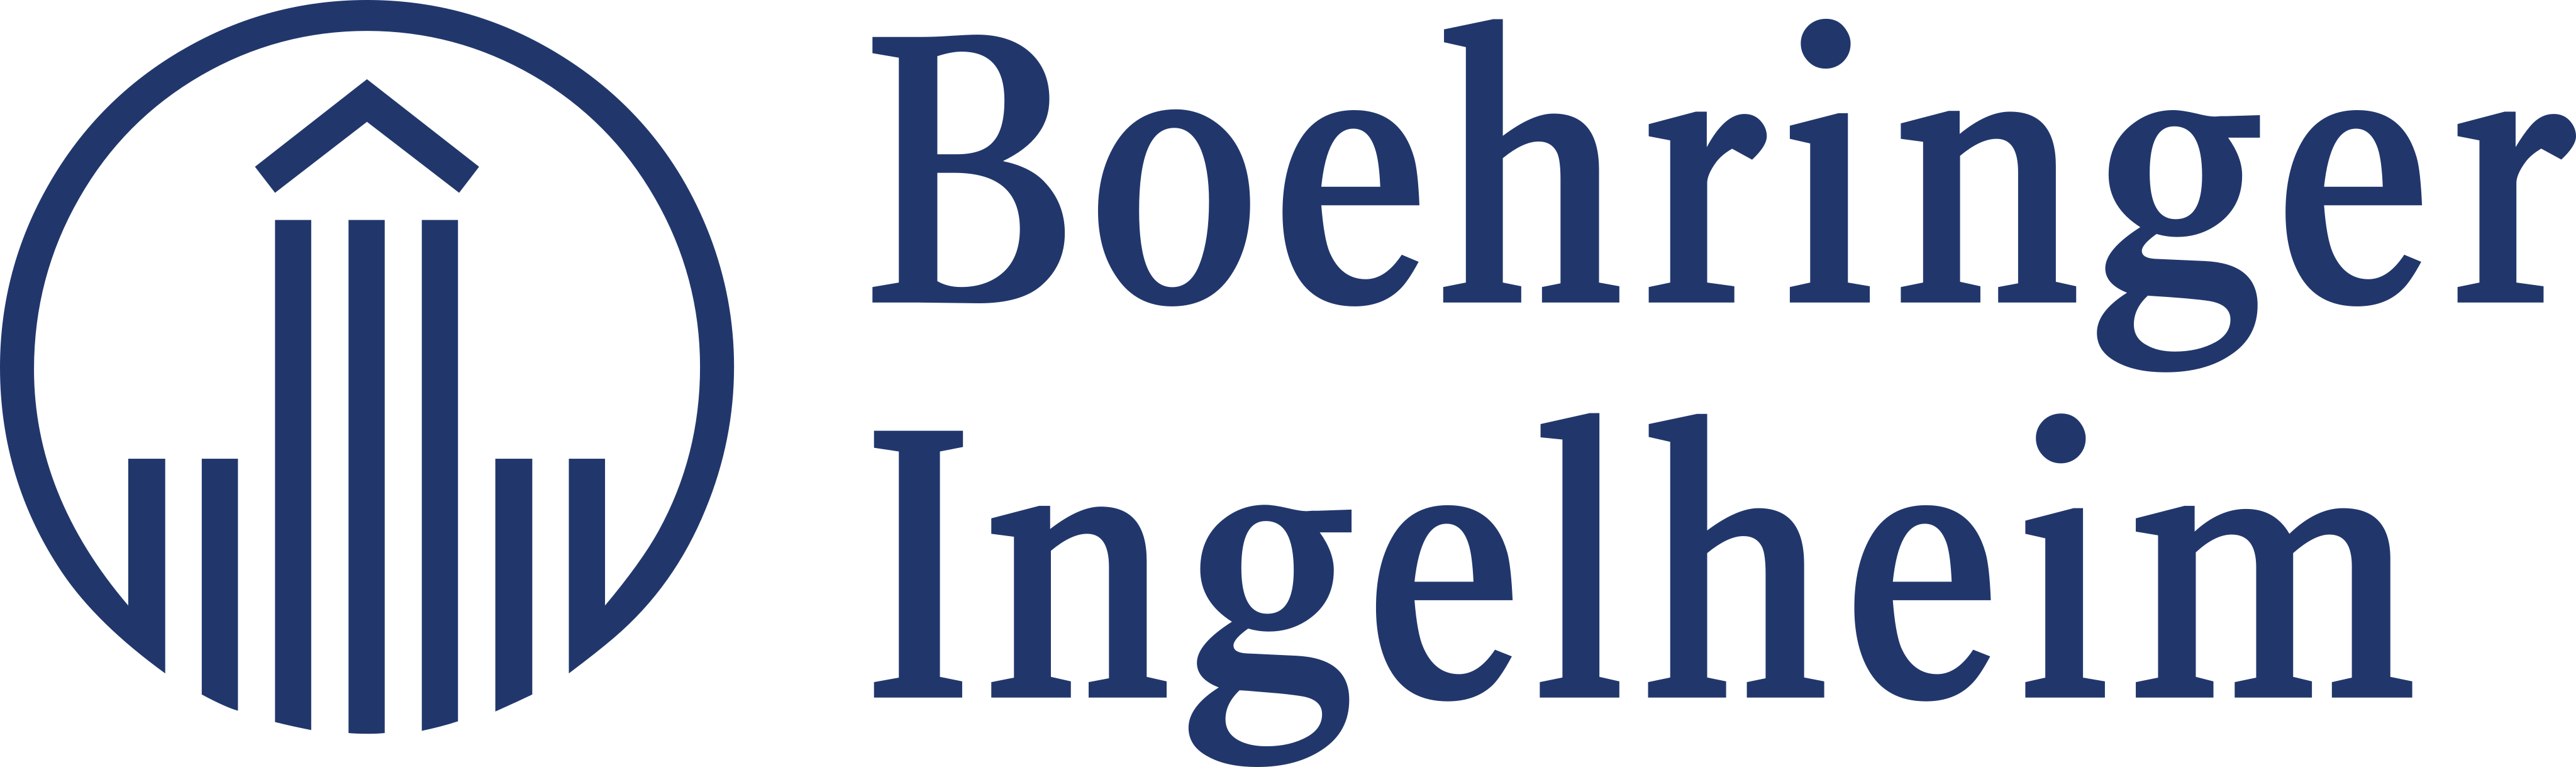 Boehringer Ingelheim Logo.